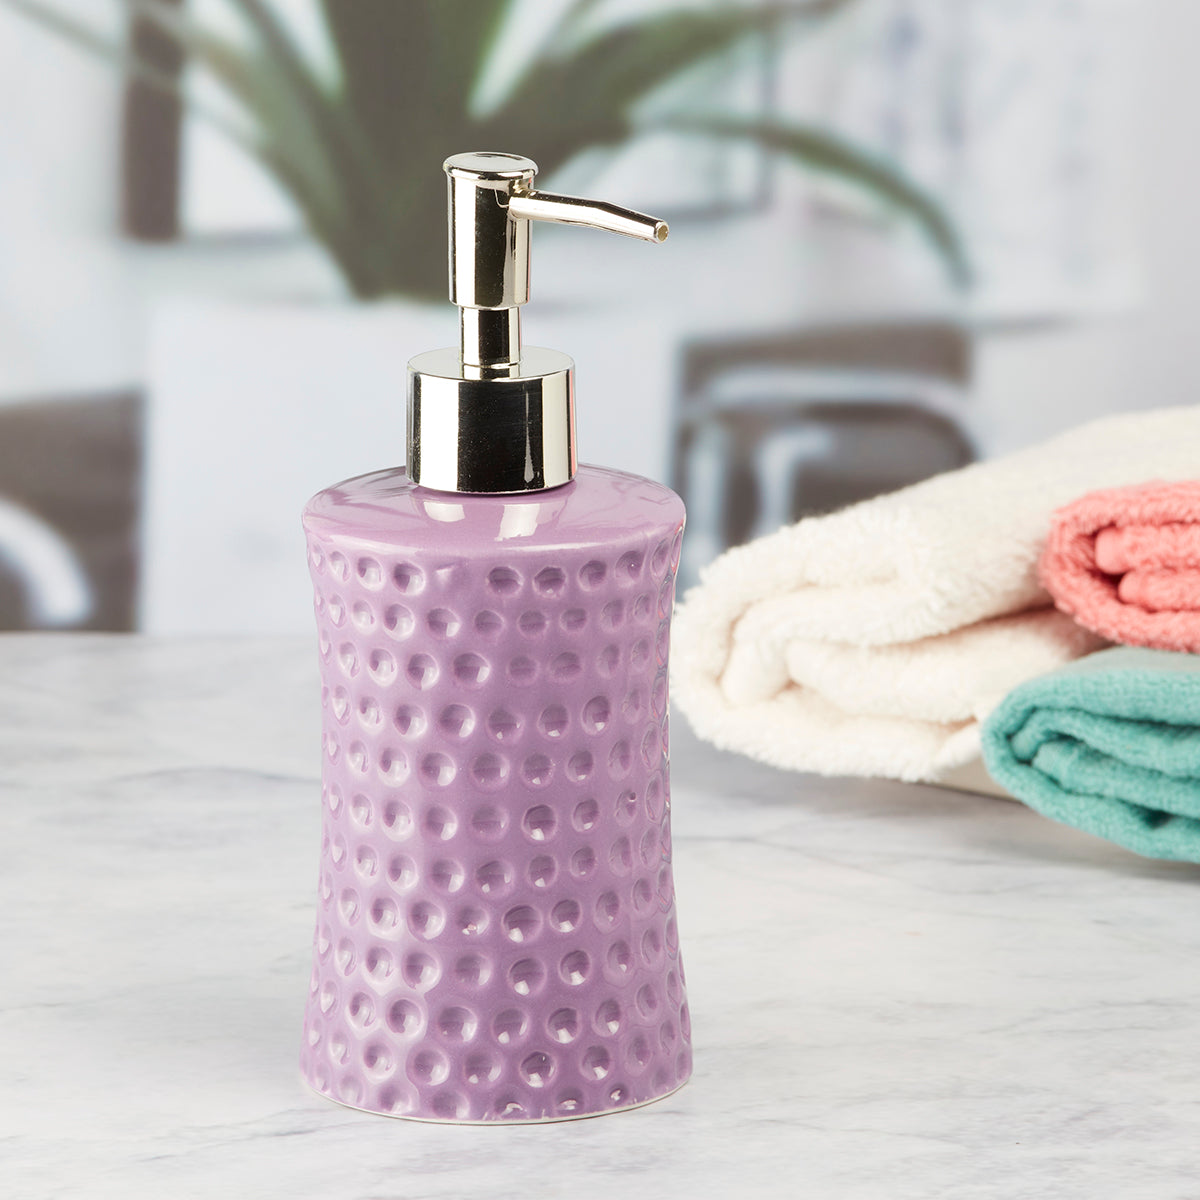 Ceramic Soap Dispenser handwash Pump for Bathroom, Set of 1, Purple (8041)